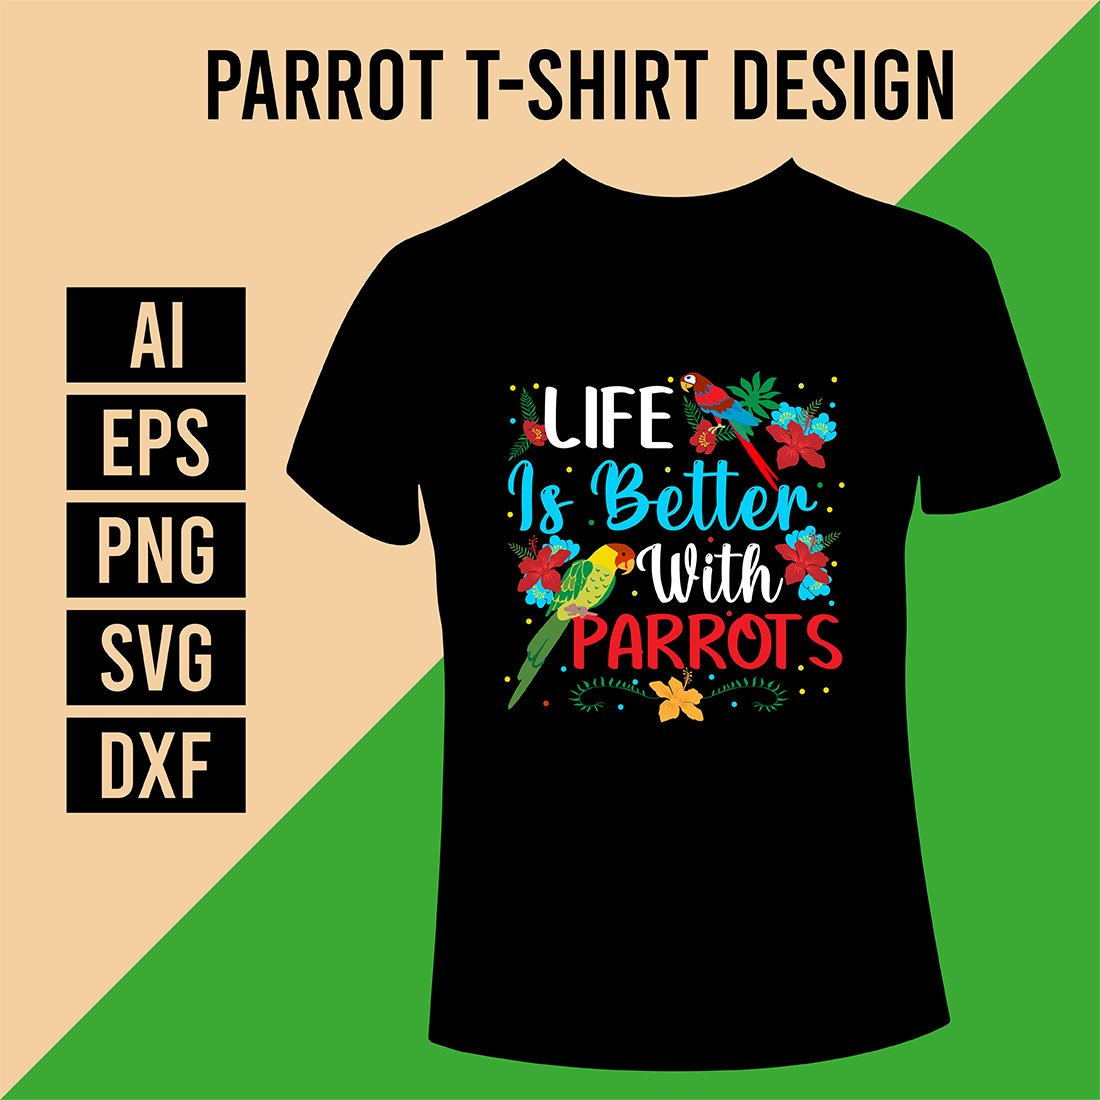 Parrot T-Shirt Design cover image.